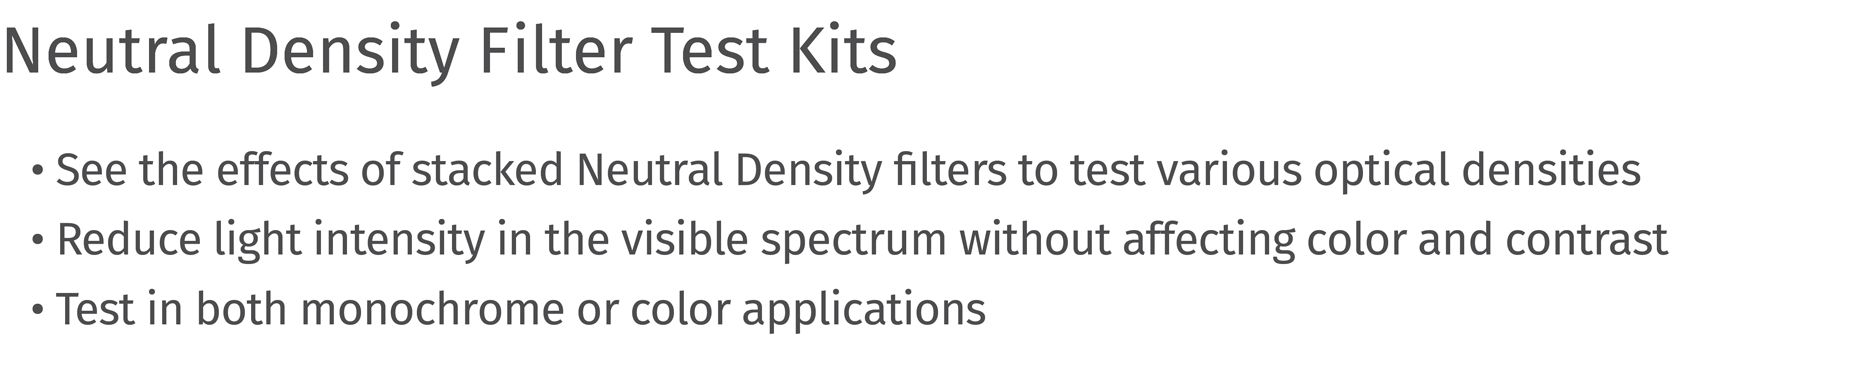 MidOpt Neutral Density Filter Test Kits